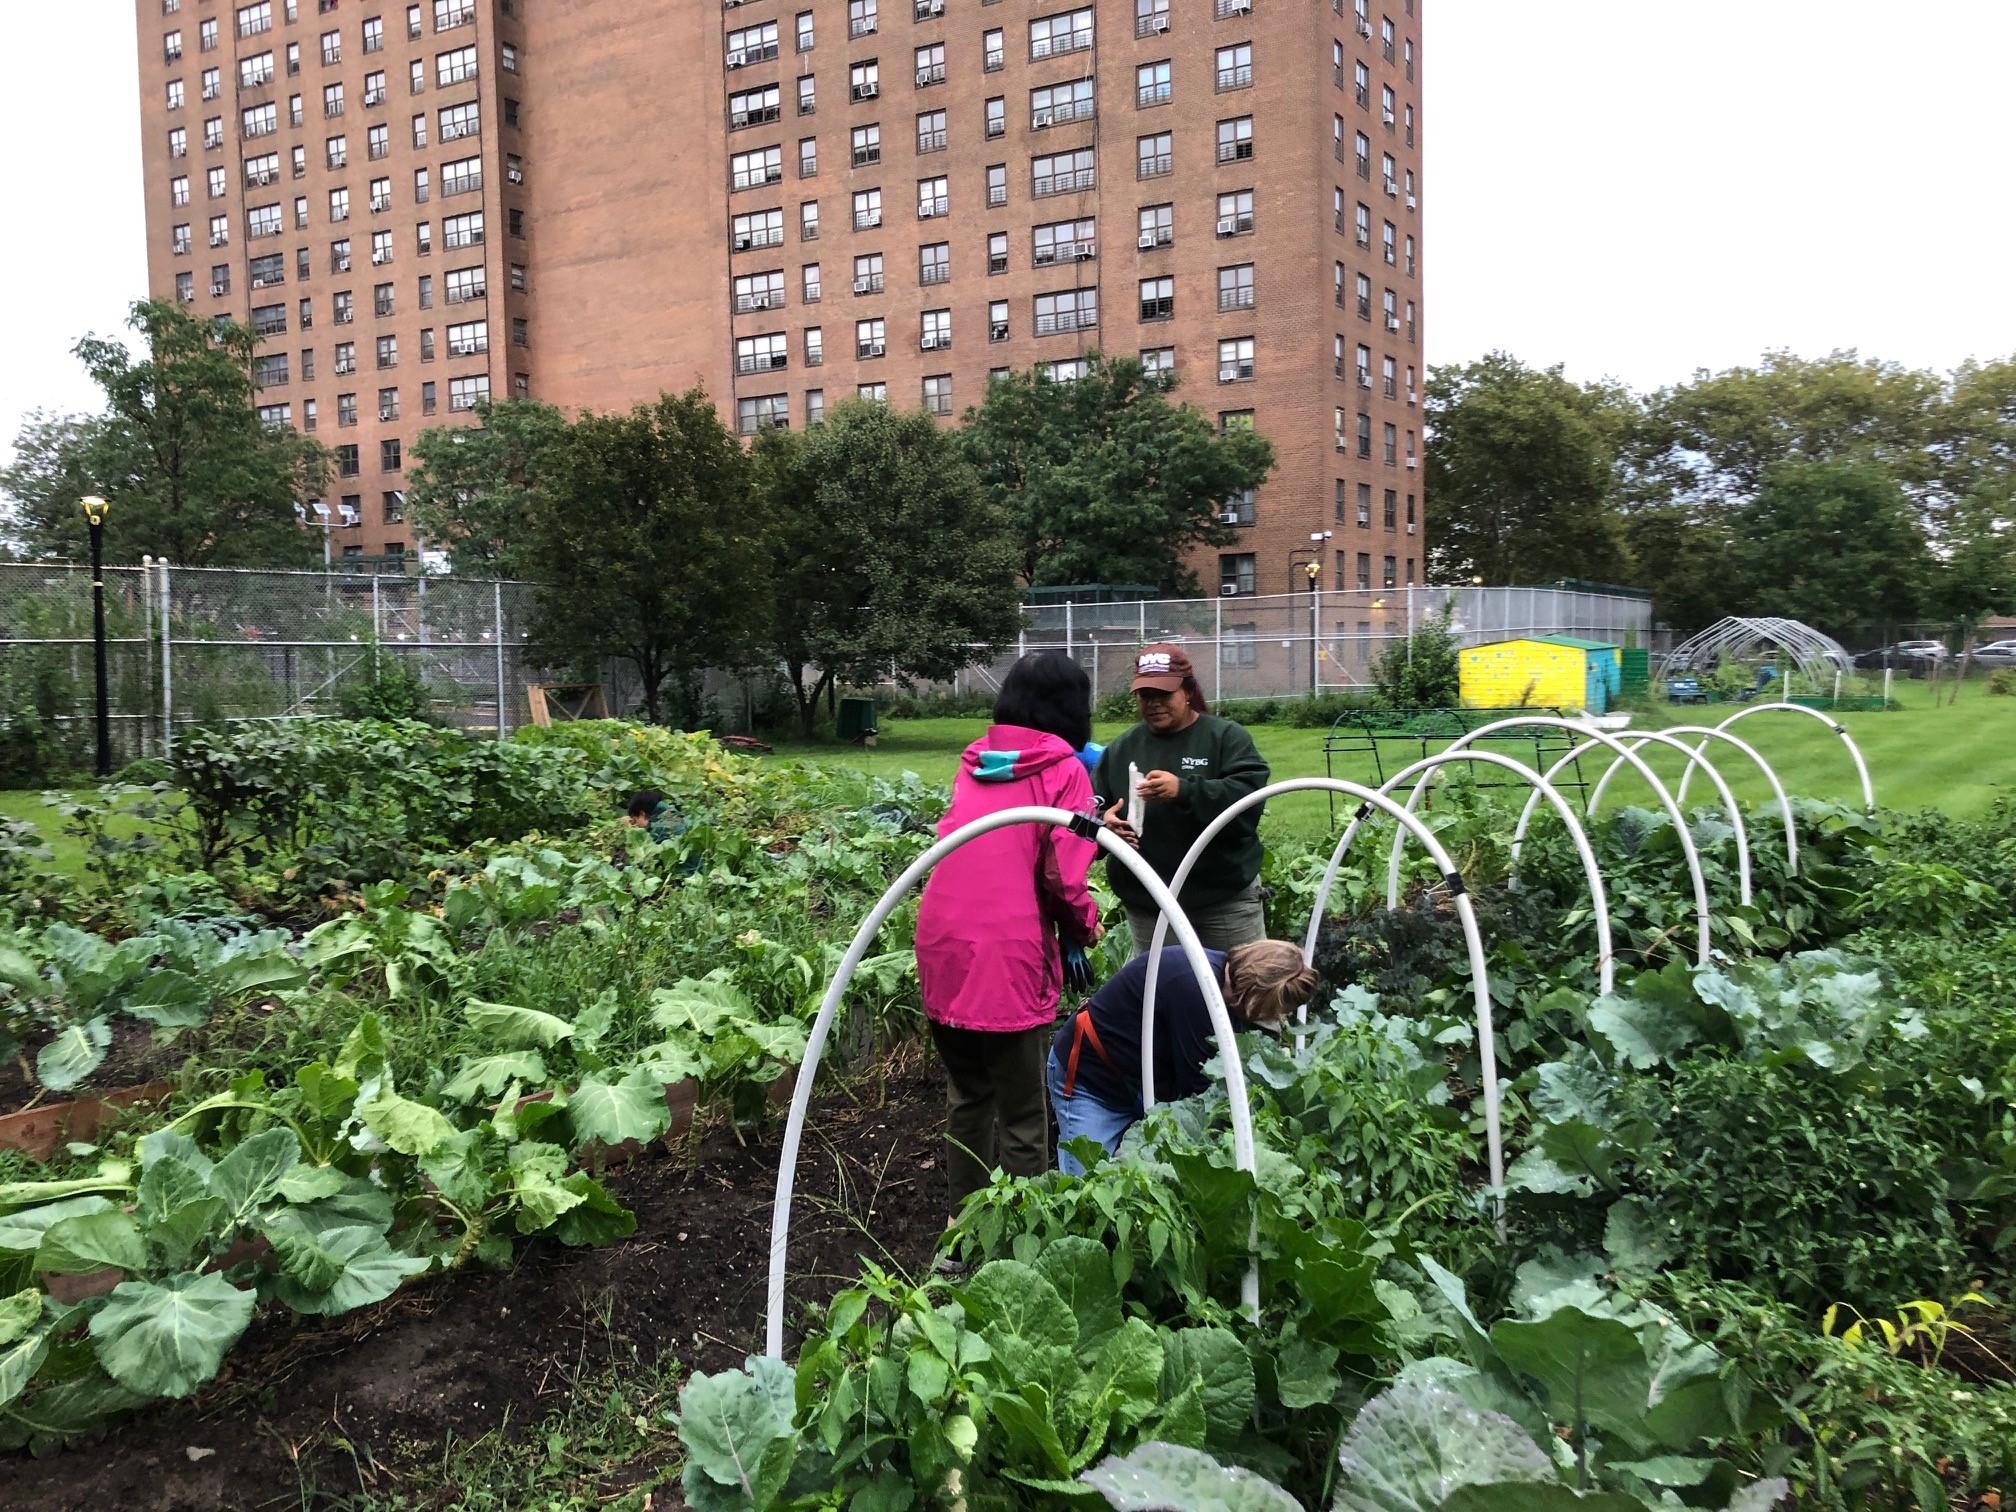 Two people plant seedlings in an urban vegetable garden